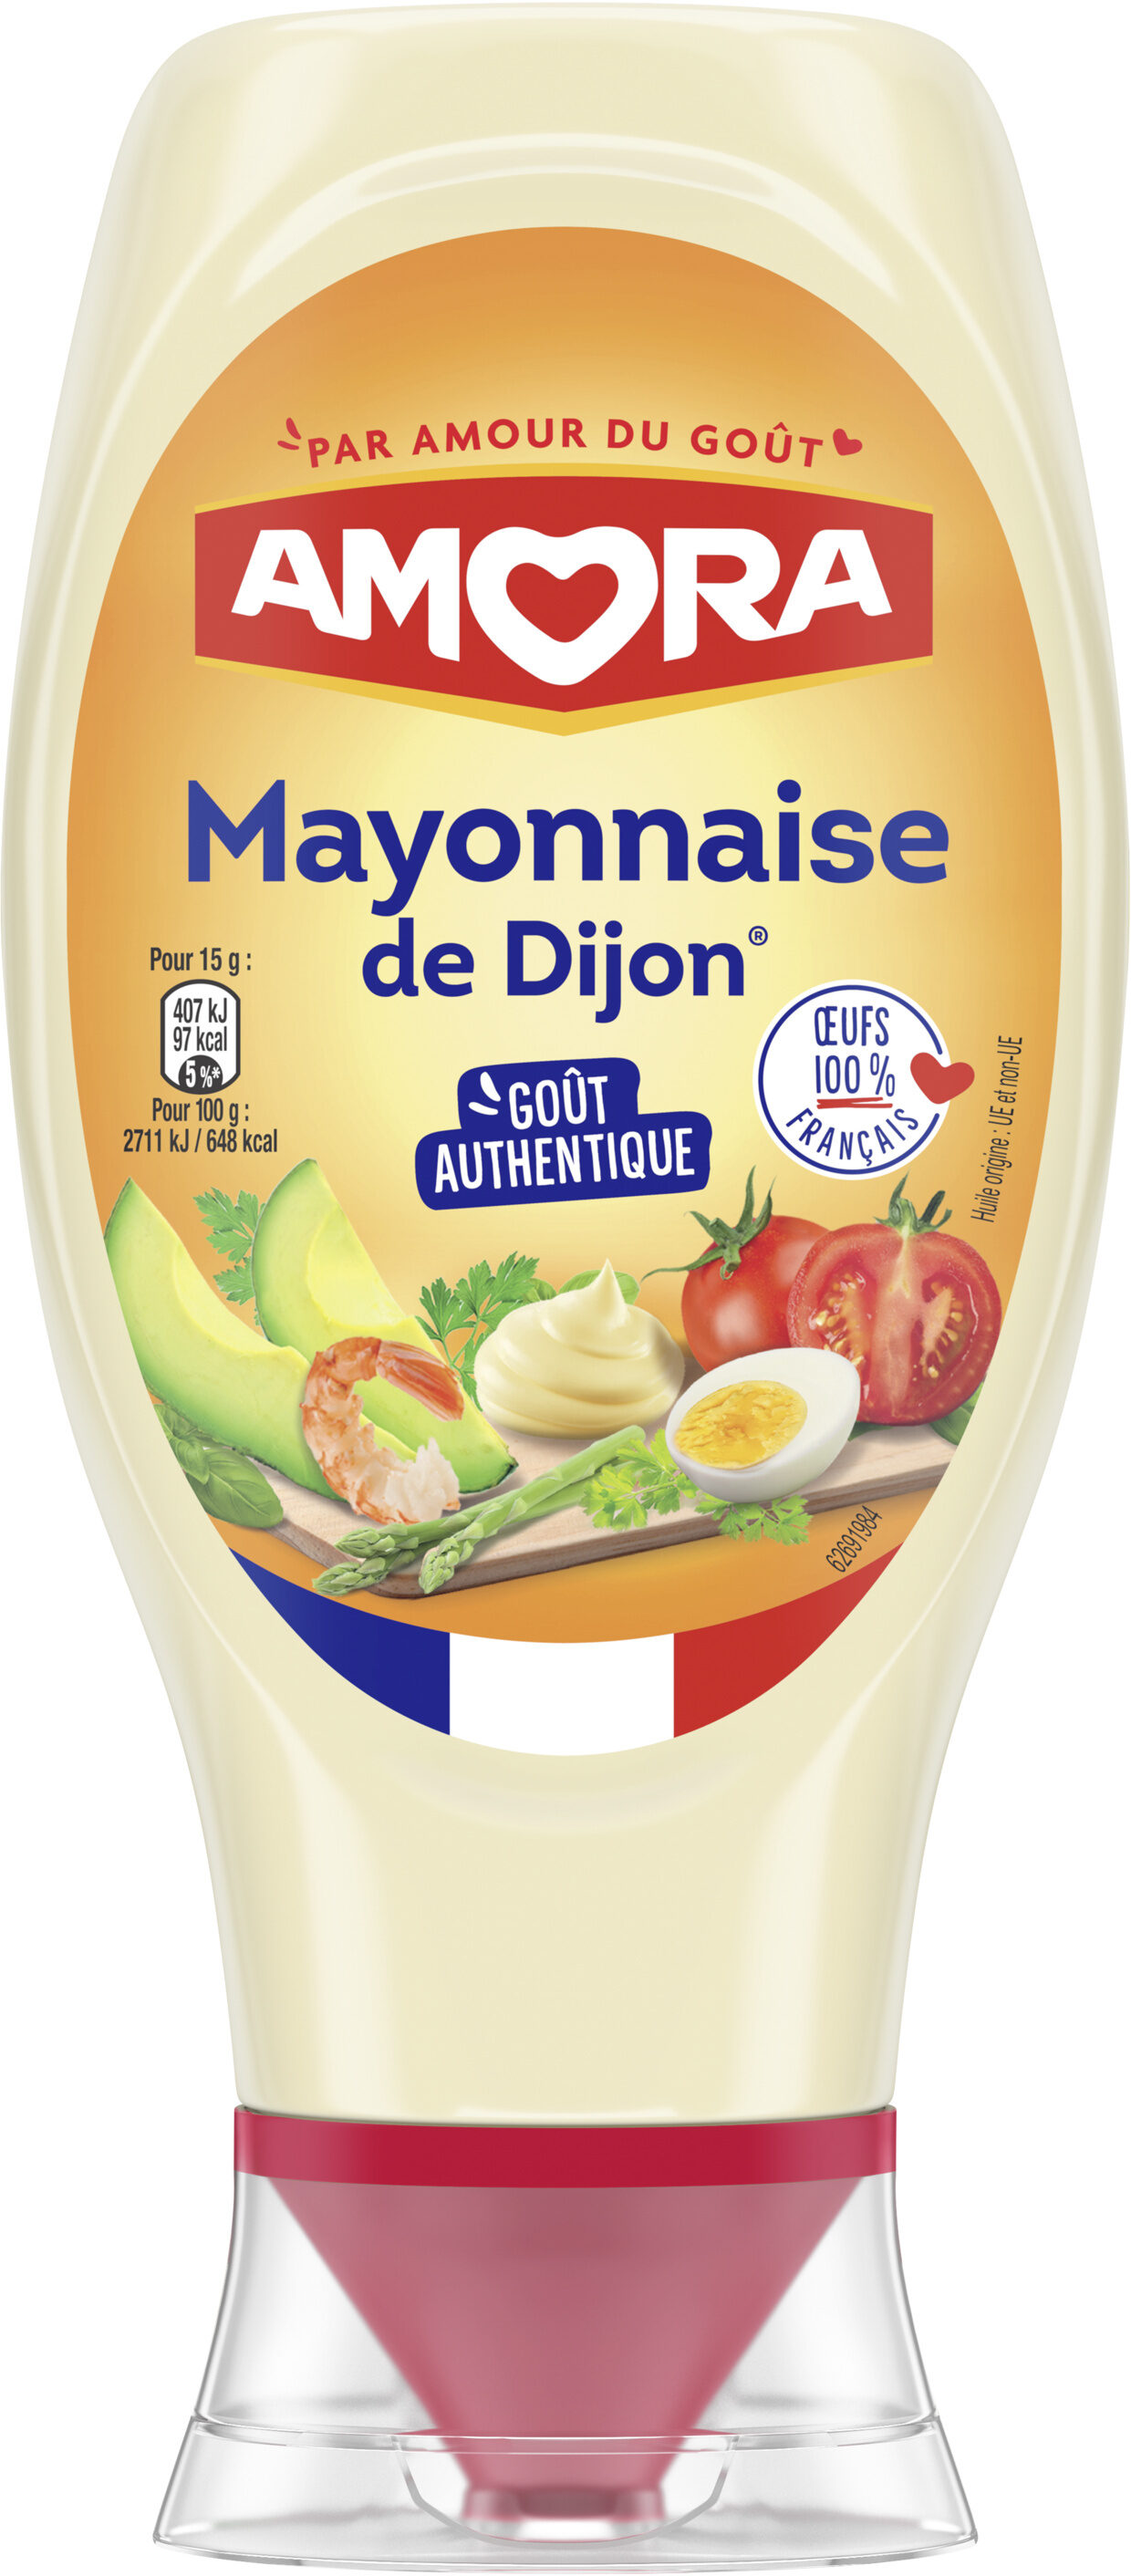 Amora grand mayonn 415g - Product - fr